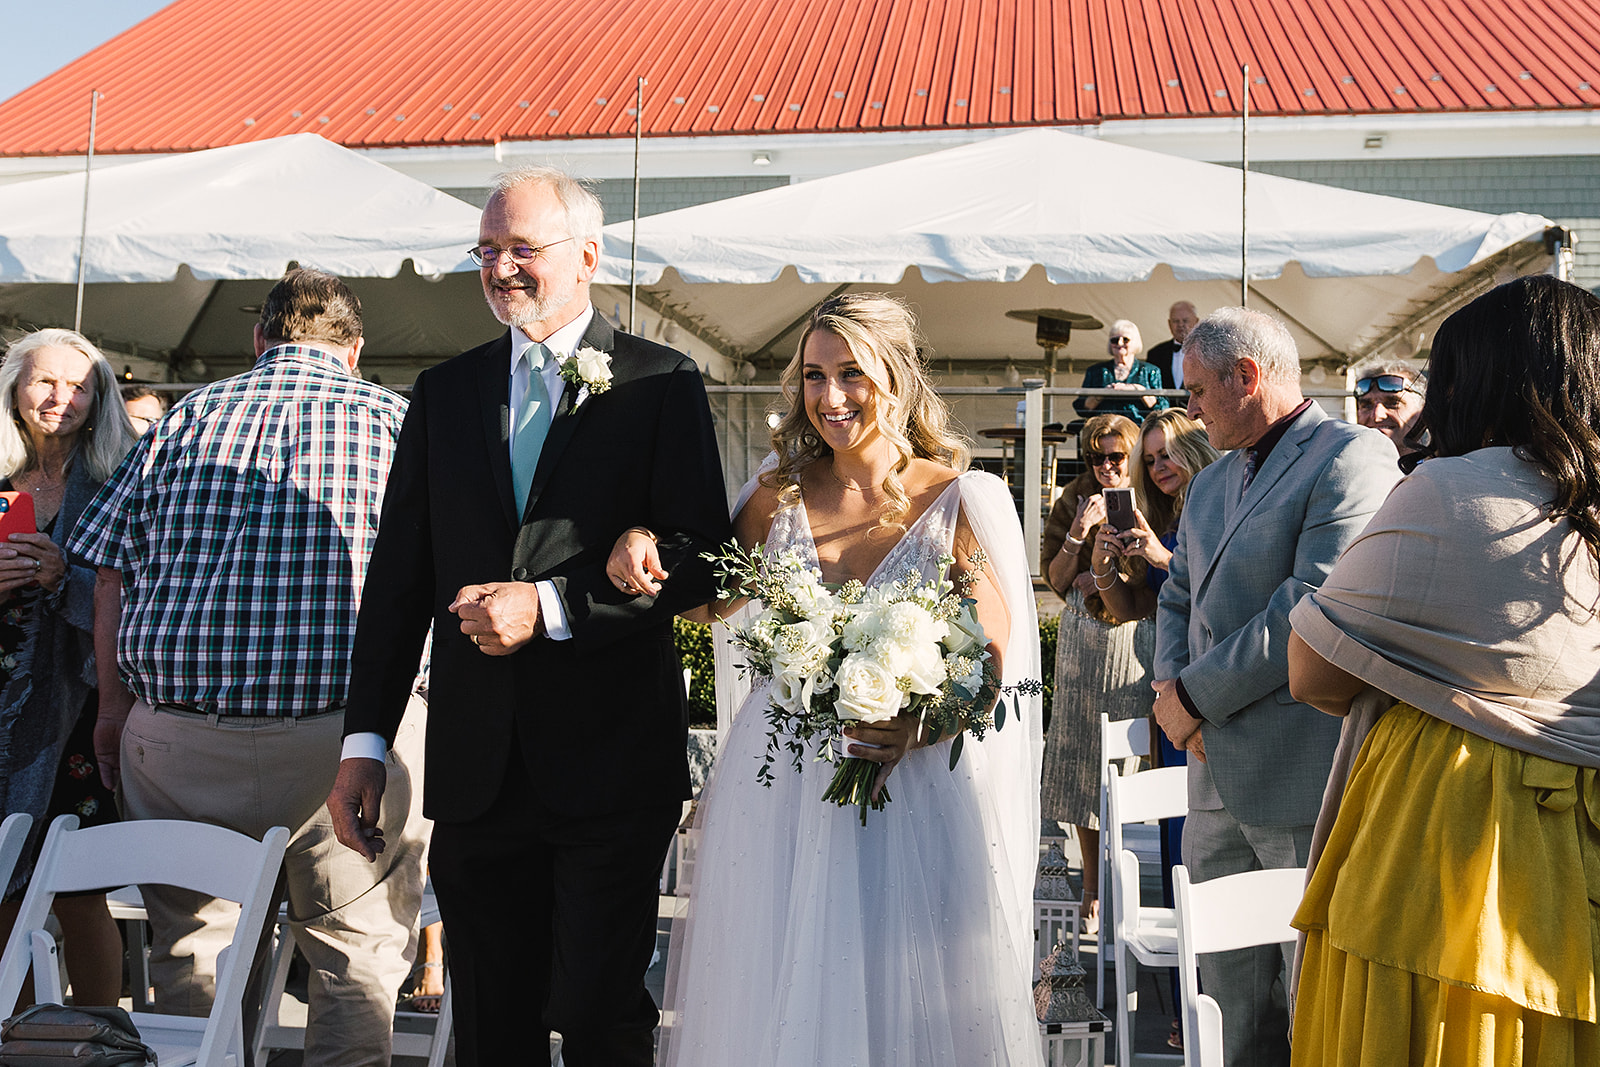 Riverwinds farm and estate Saco Maine Wedding ceremony